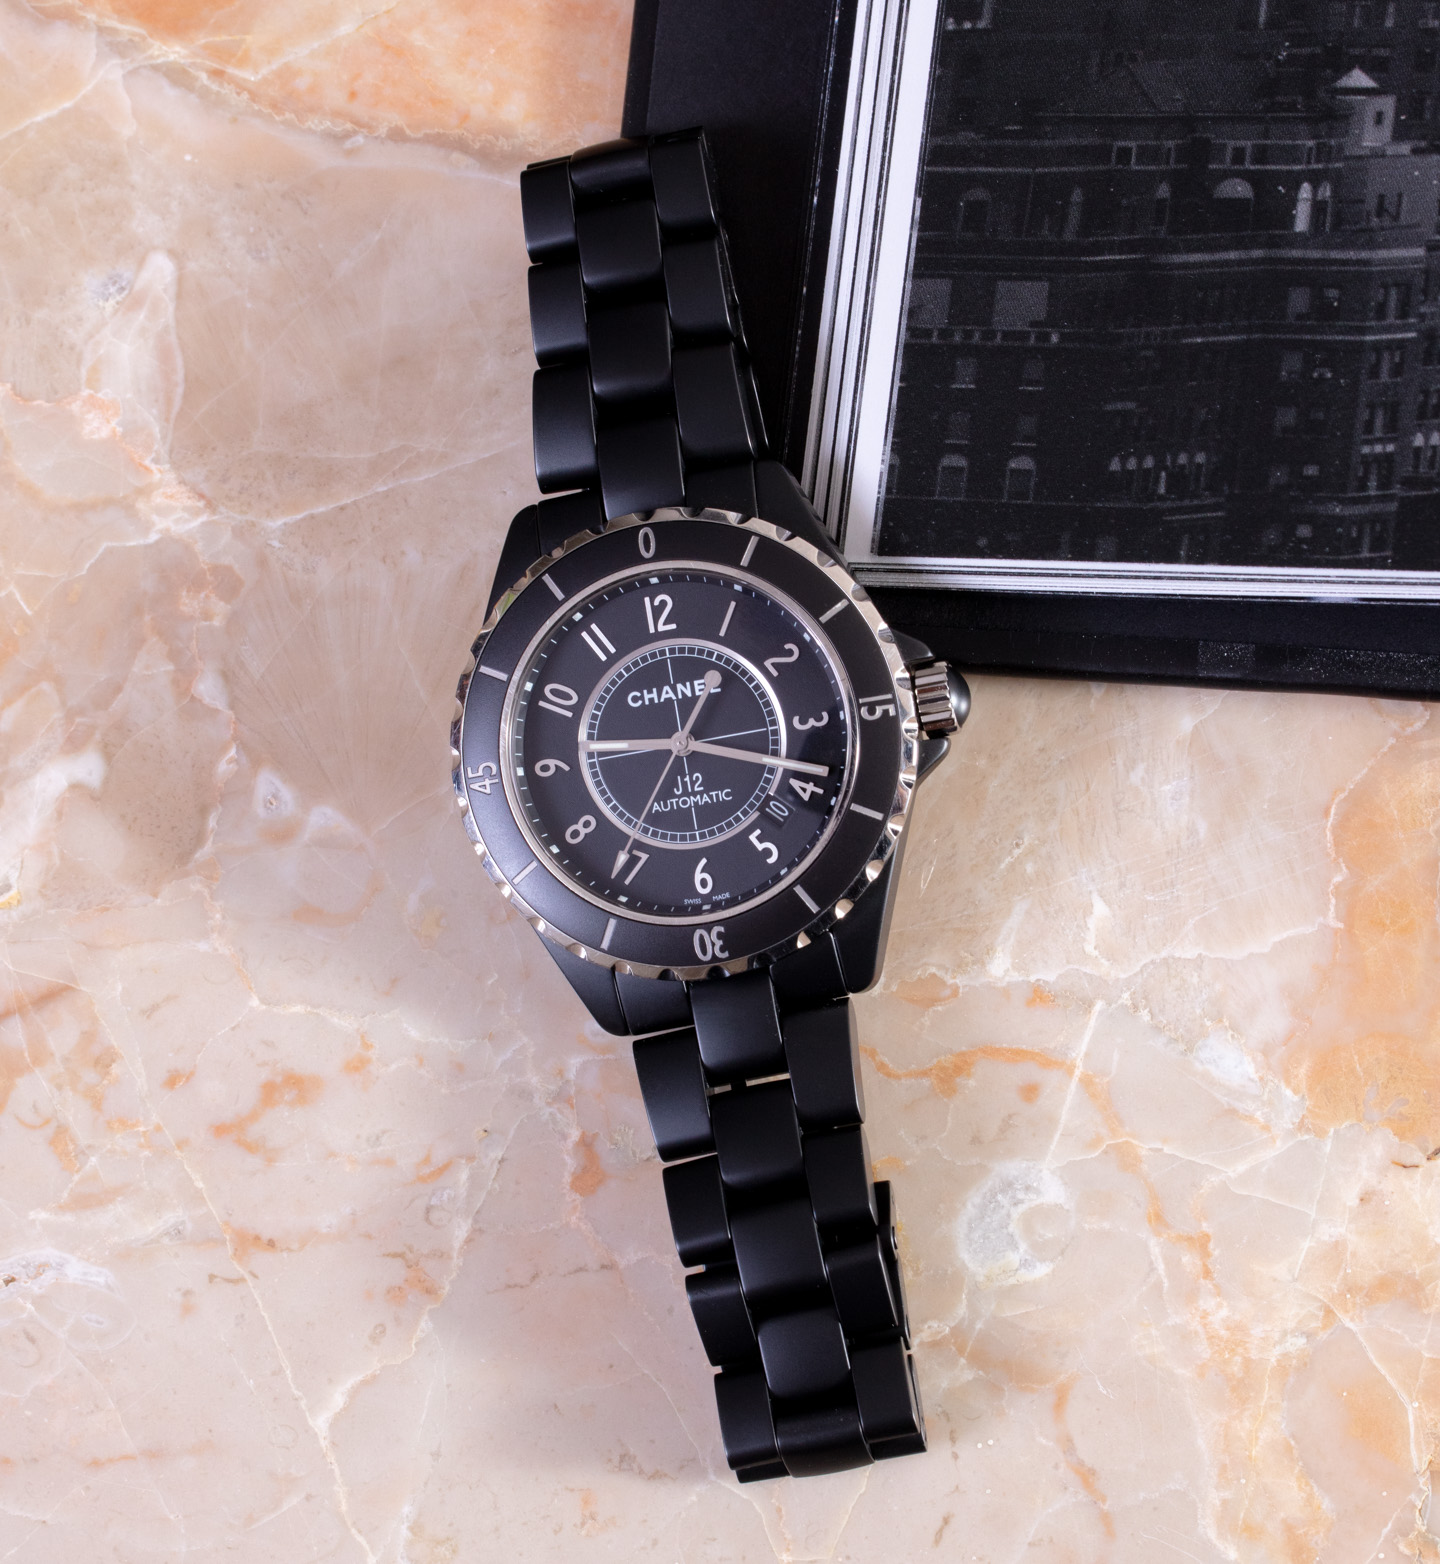 J12 automatique ceramic watch Chanel Black in Ceramic  21999161